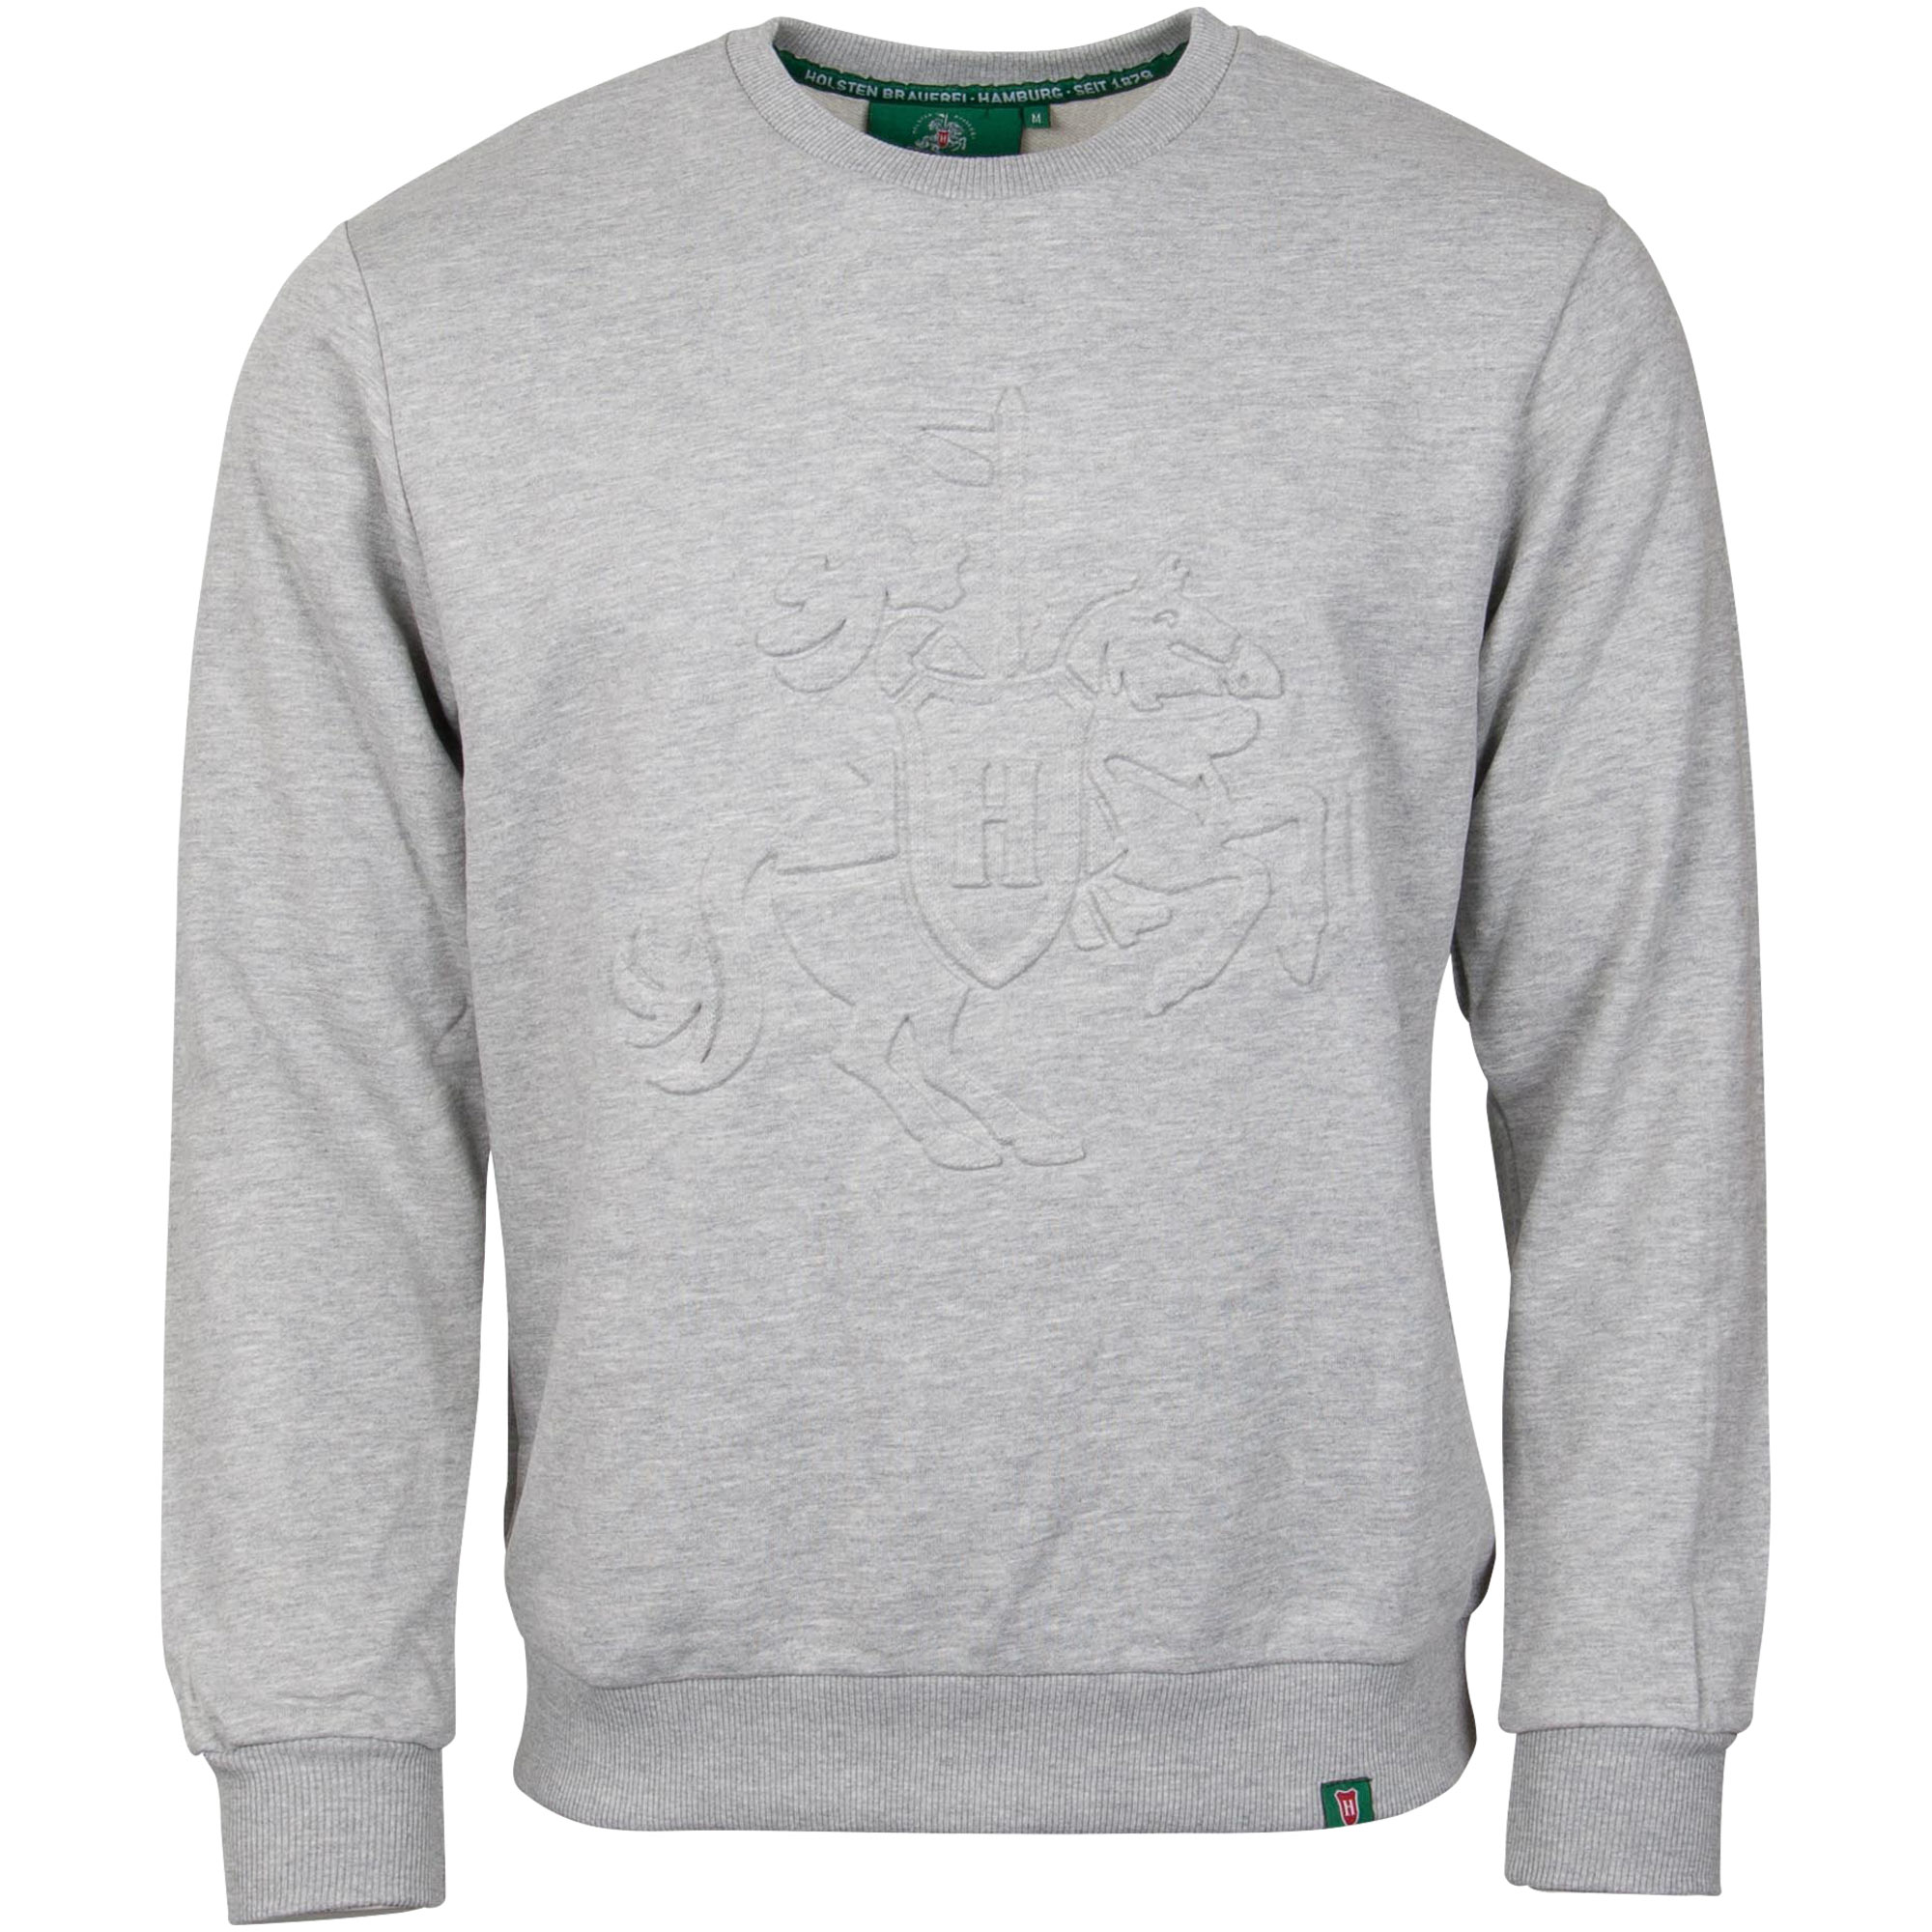 Holsten - Sweatshirt 3D Ritter - grey